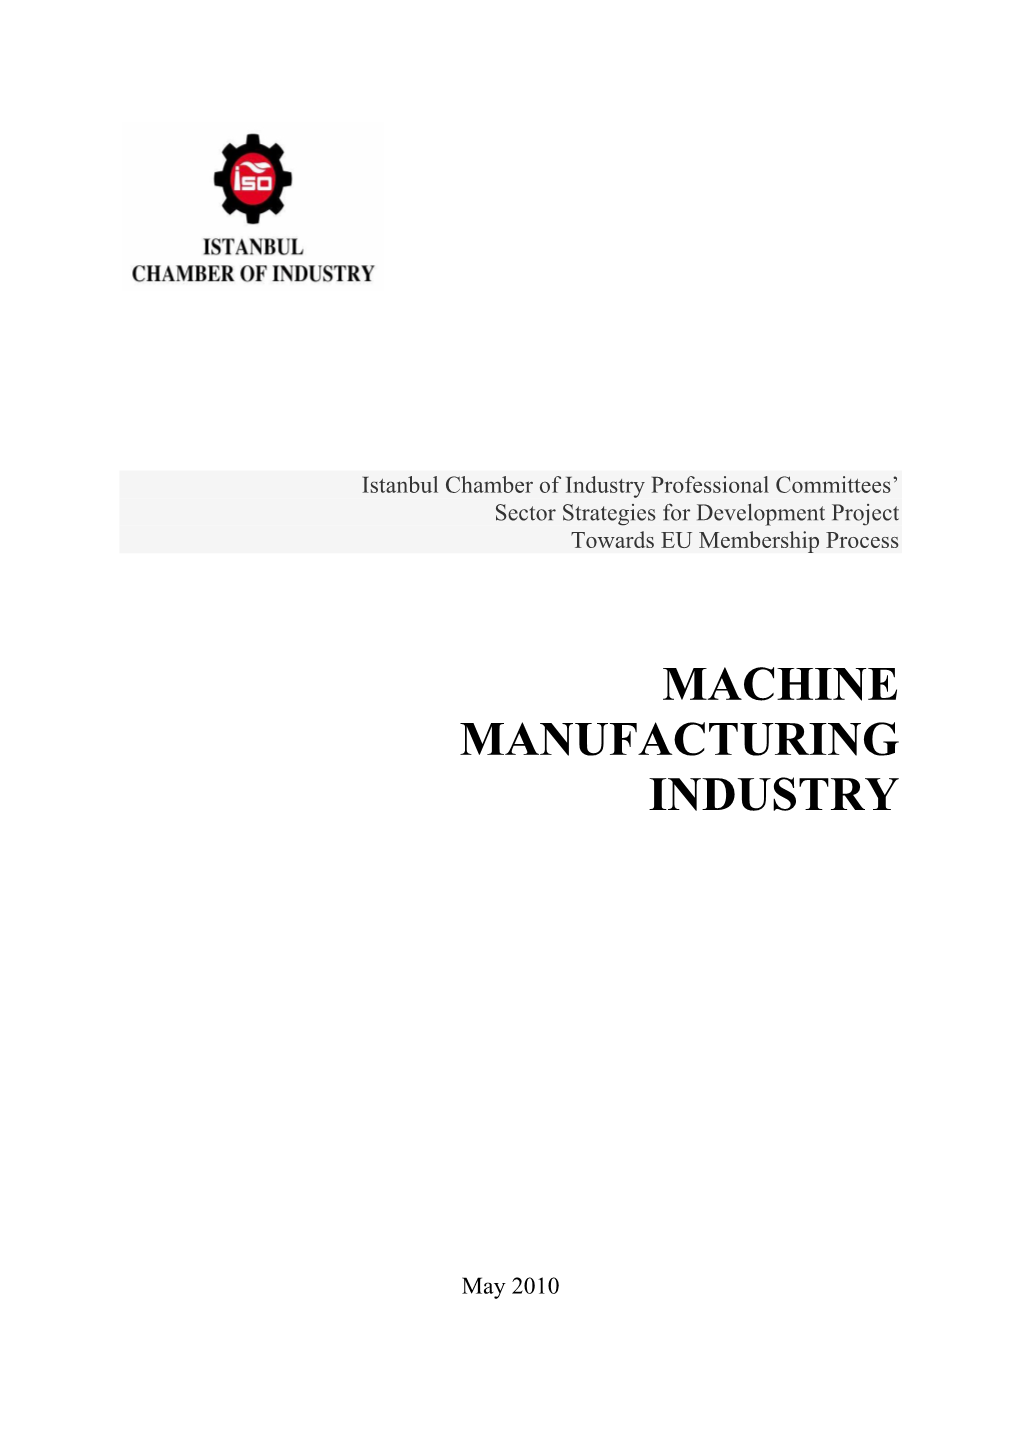 Machine Manufacturing Industry